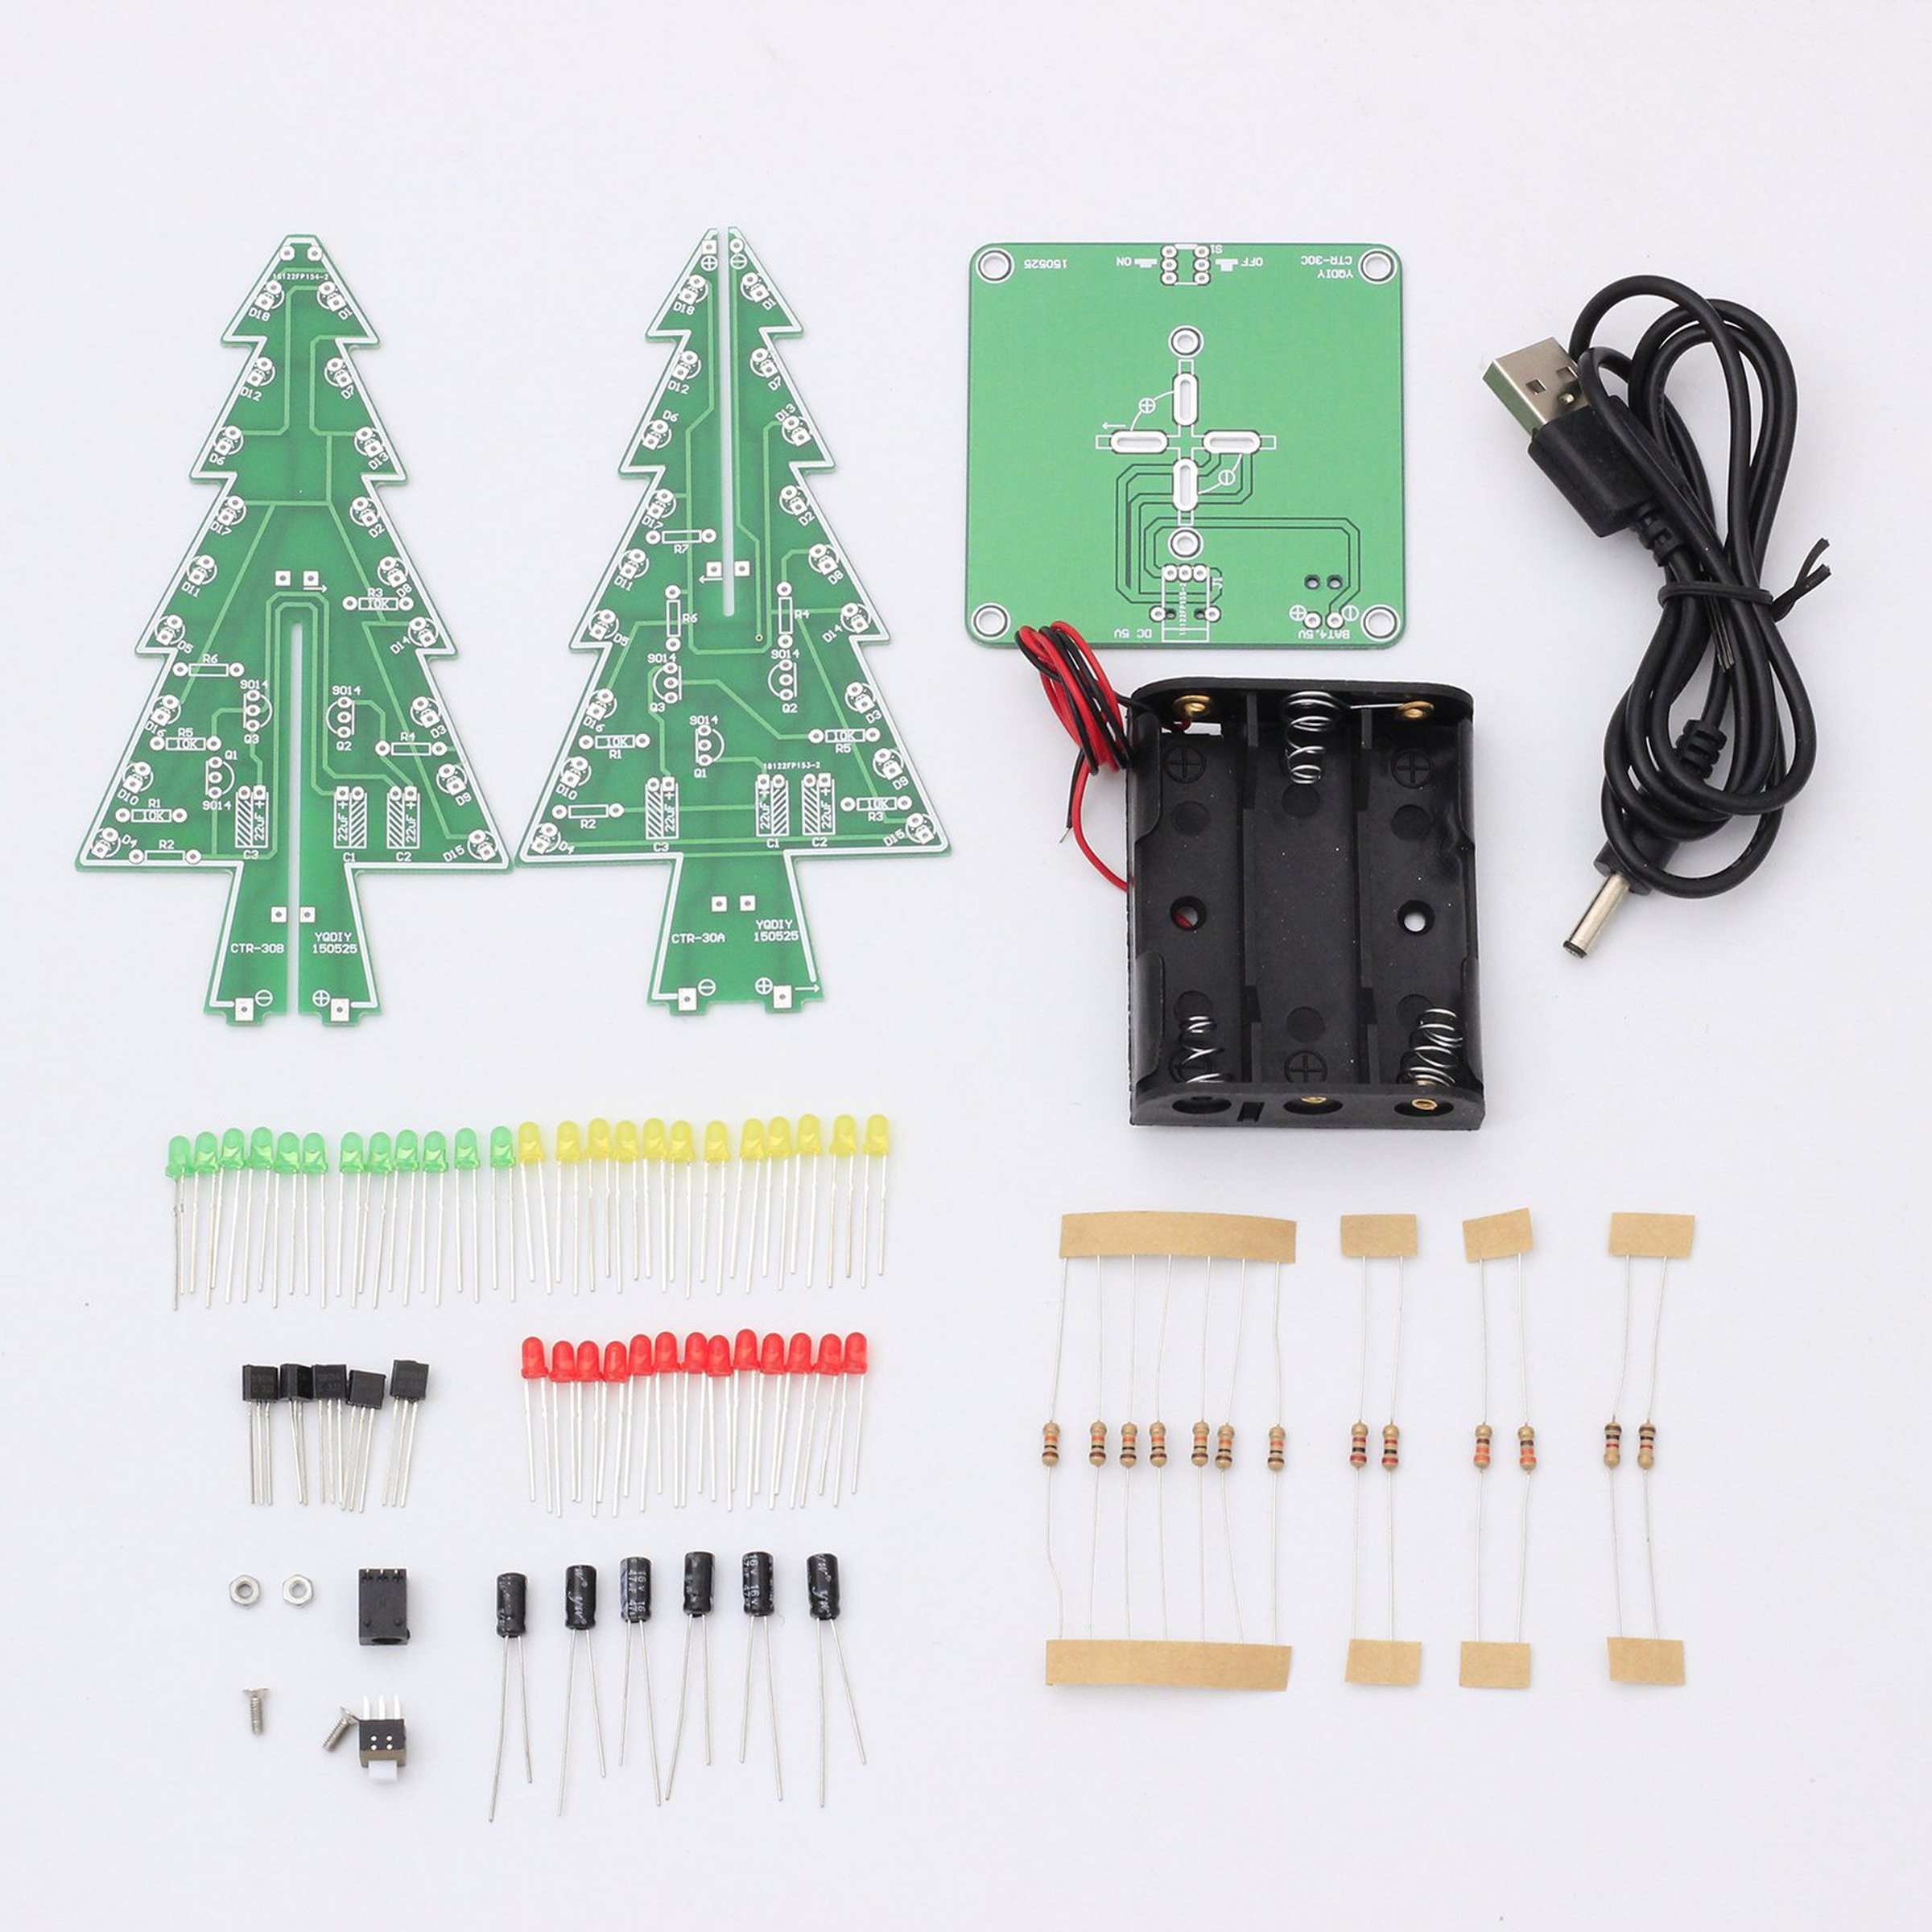 DIY Led Kits
 DIY Flashing LED Christmas Tree Circuit Kit 7212 from